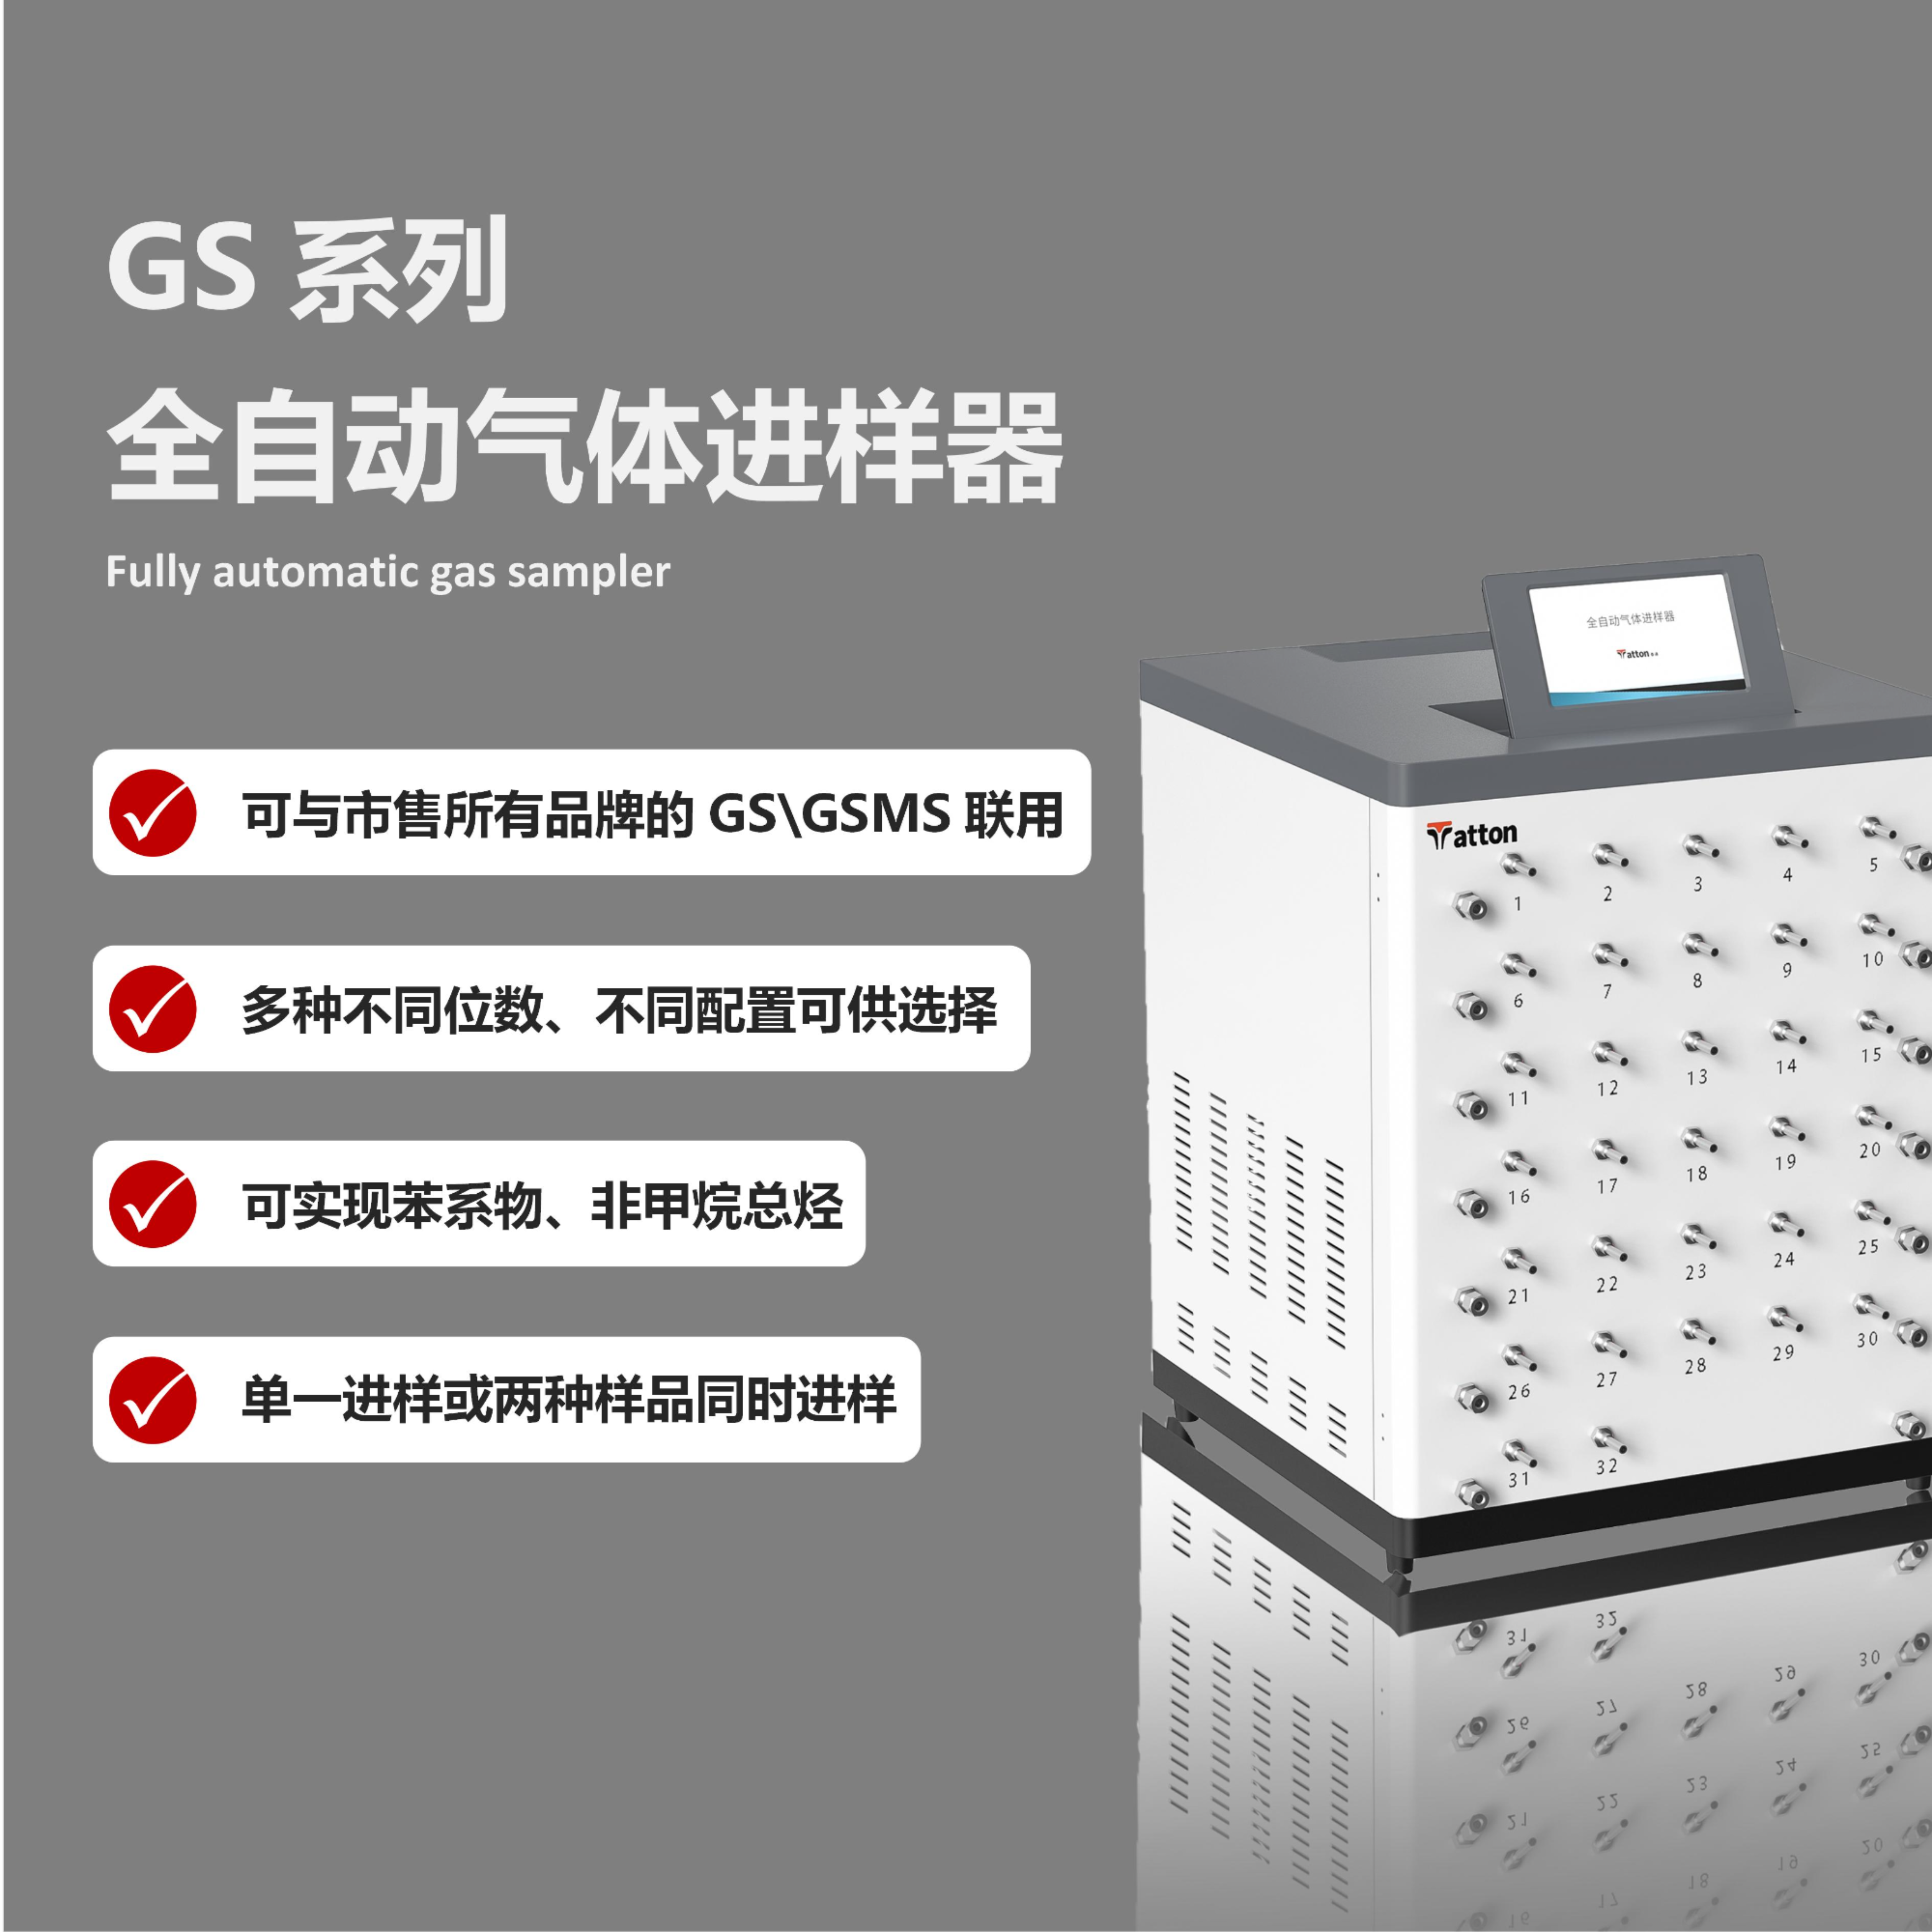 GS系列全自动气体进样器